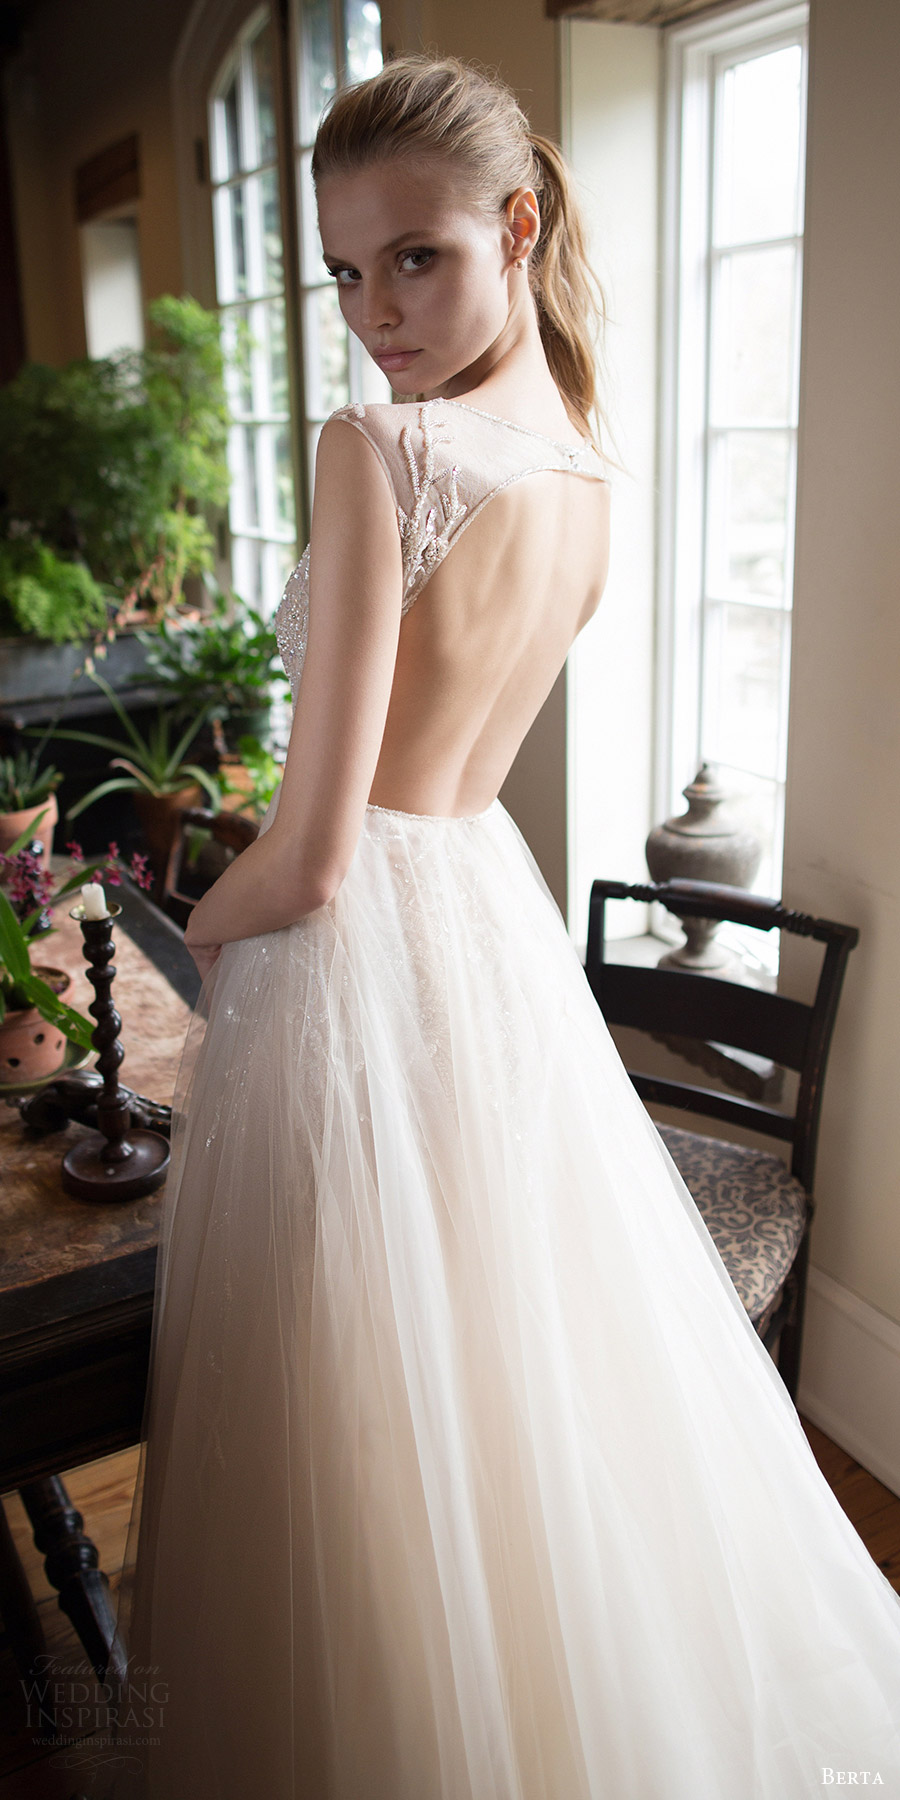 berta bridal fall 2016 sleeveless illusion jewel neck aline wedding dress (16 105) bv keyhole